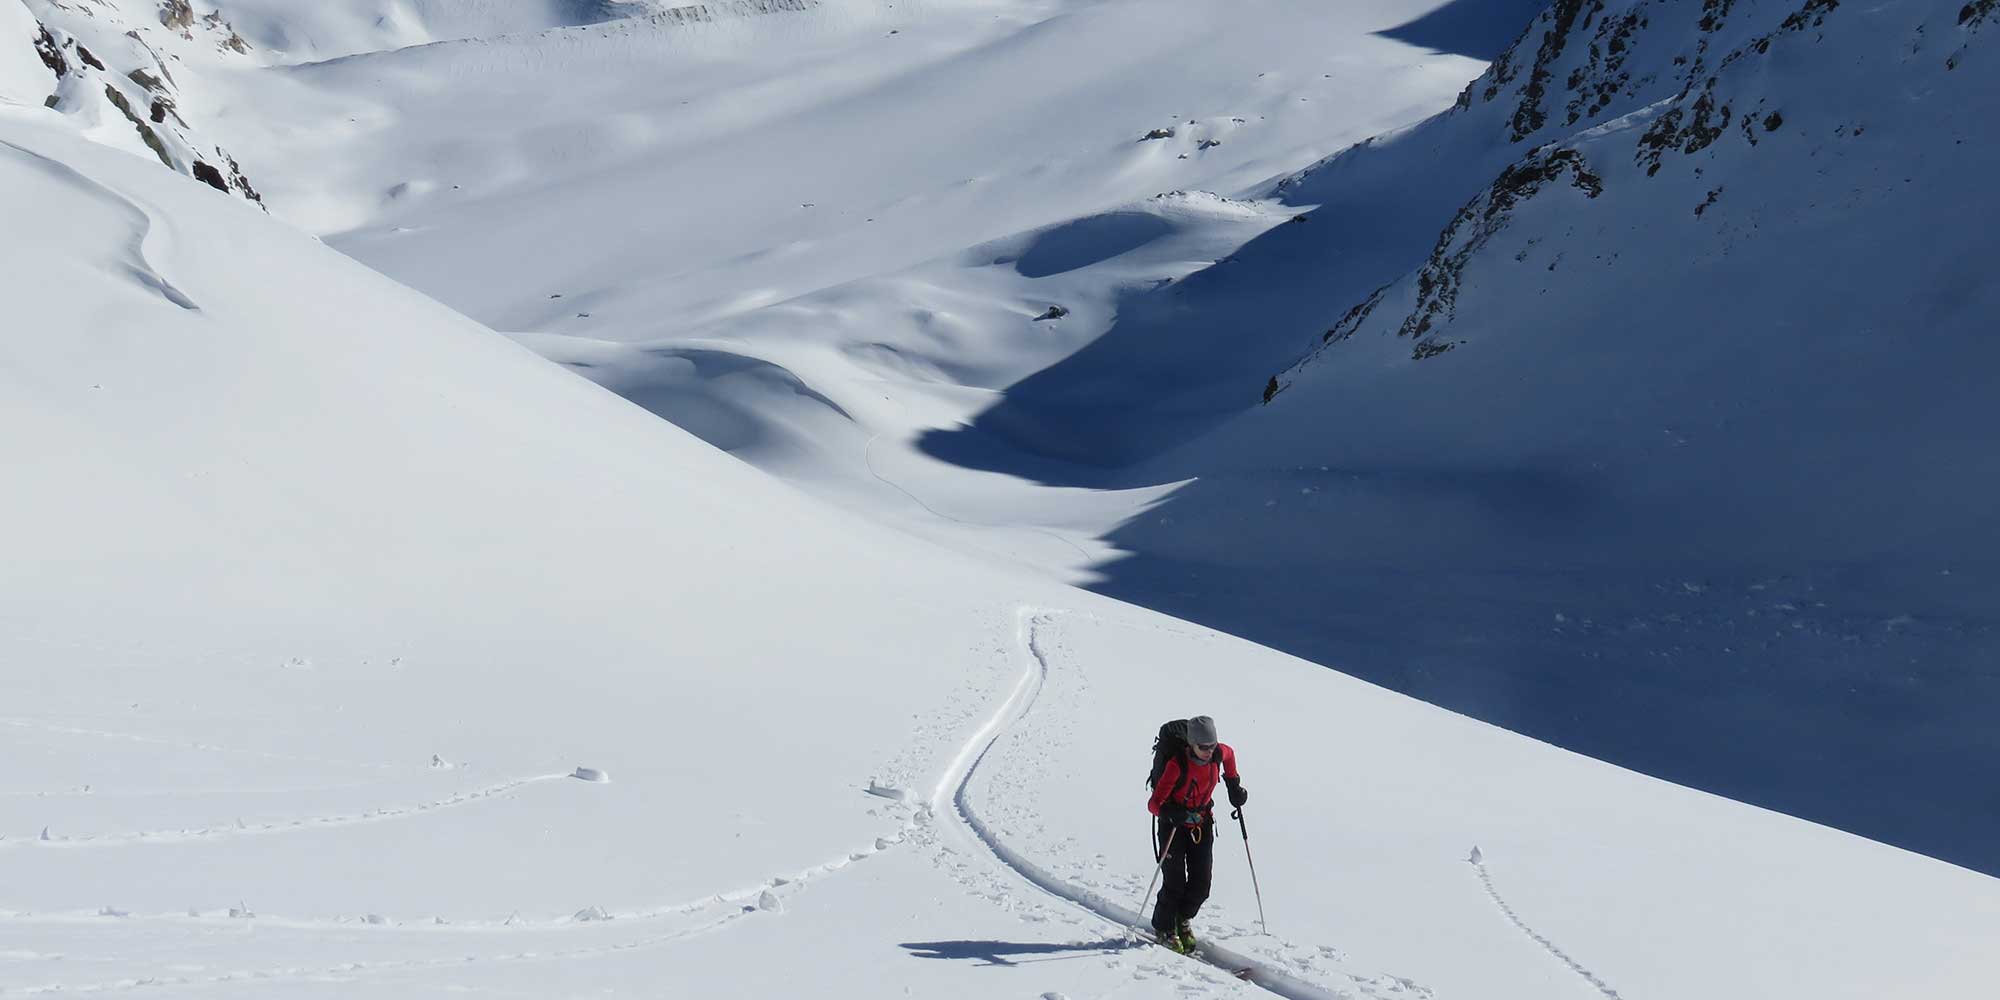 Galerie photos prosneige ski de randonnée